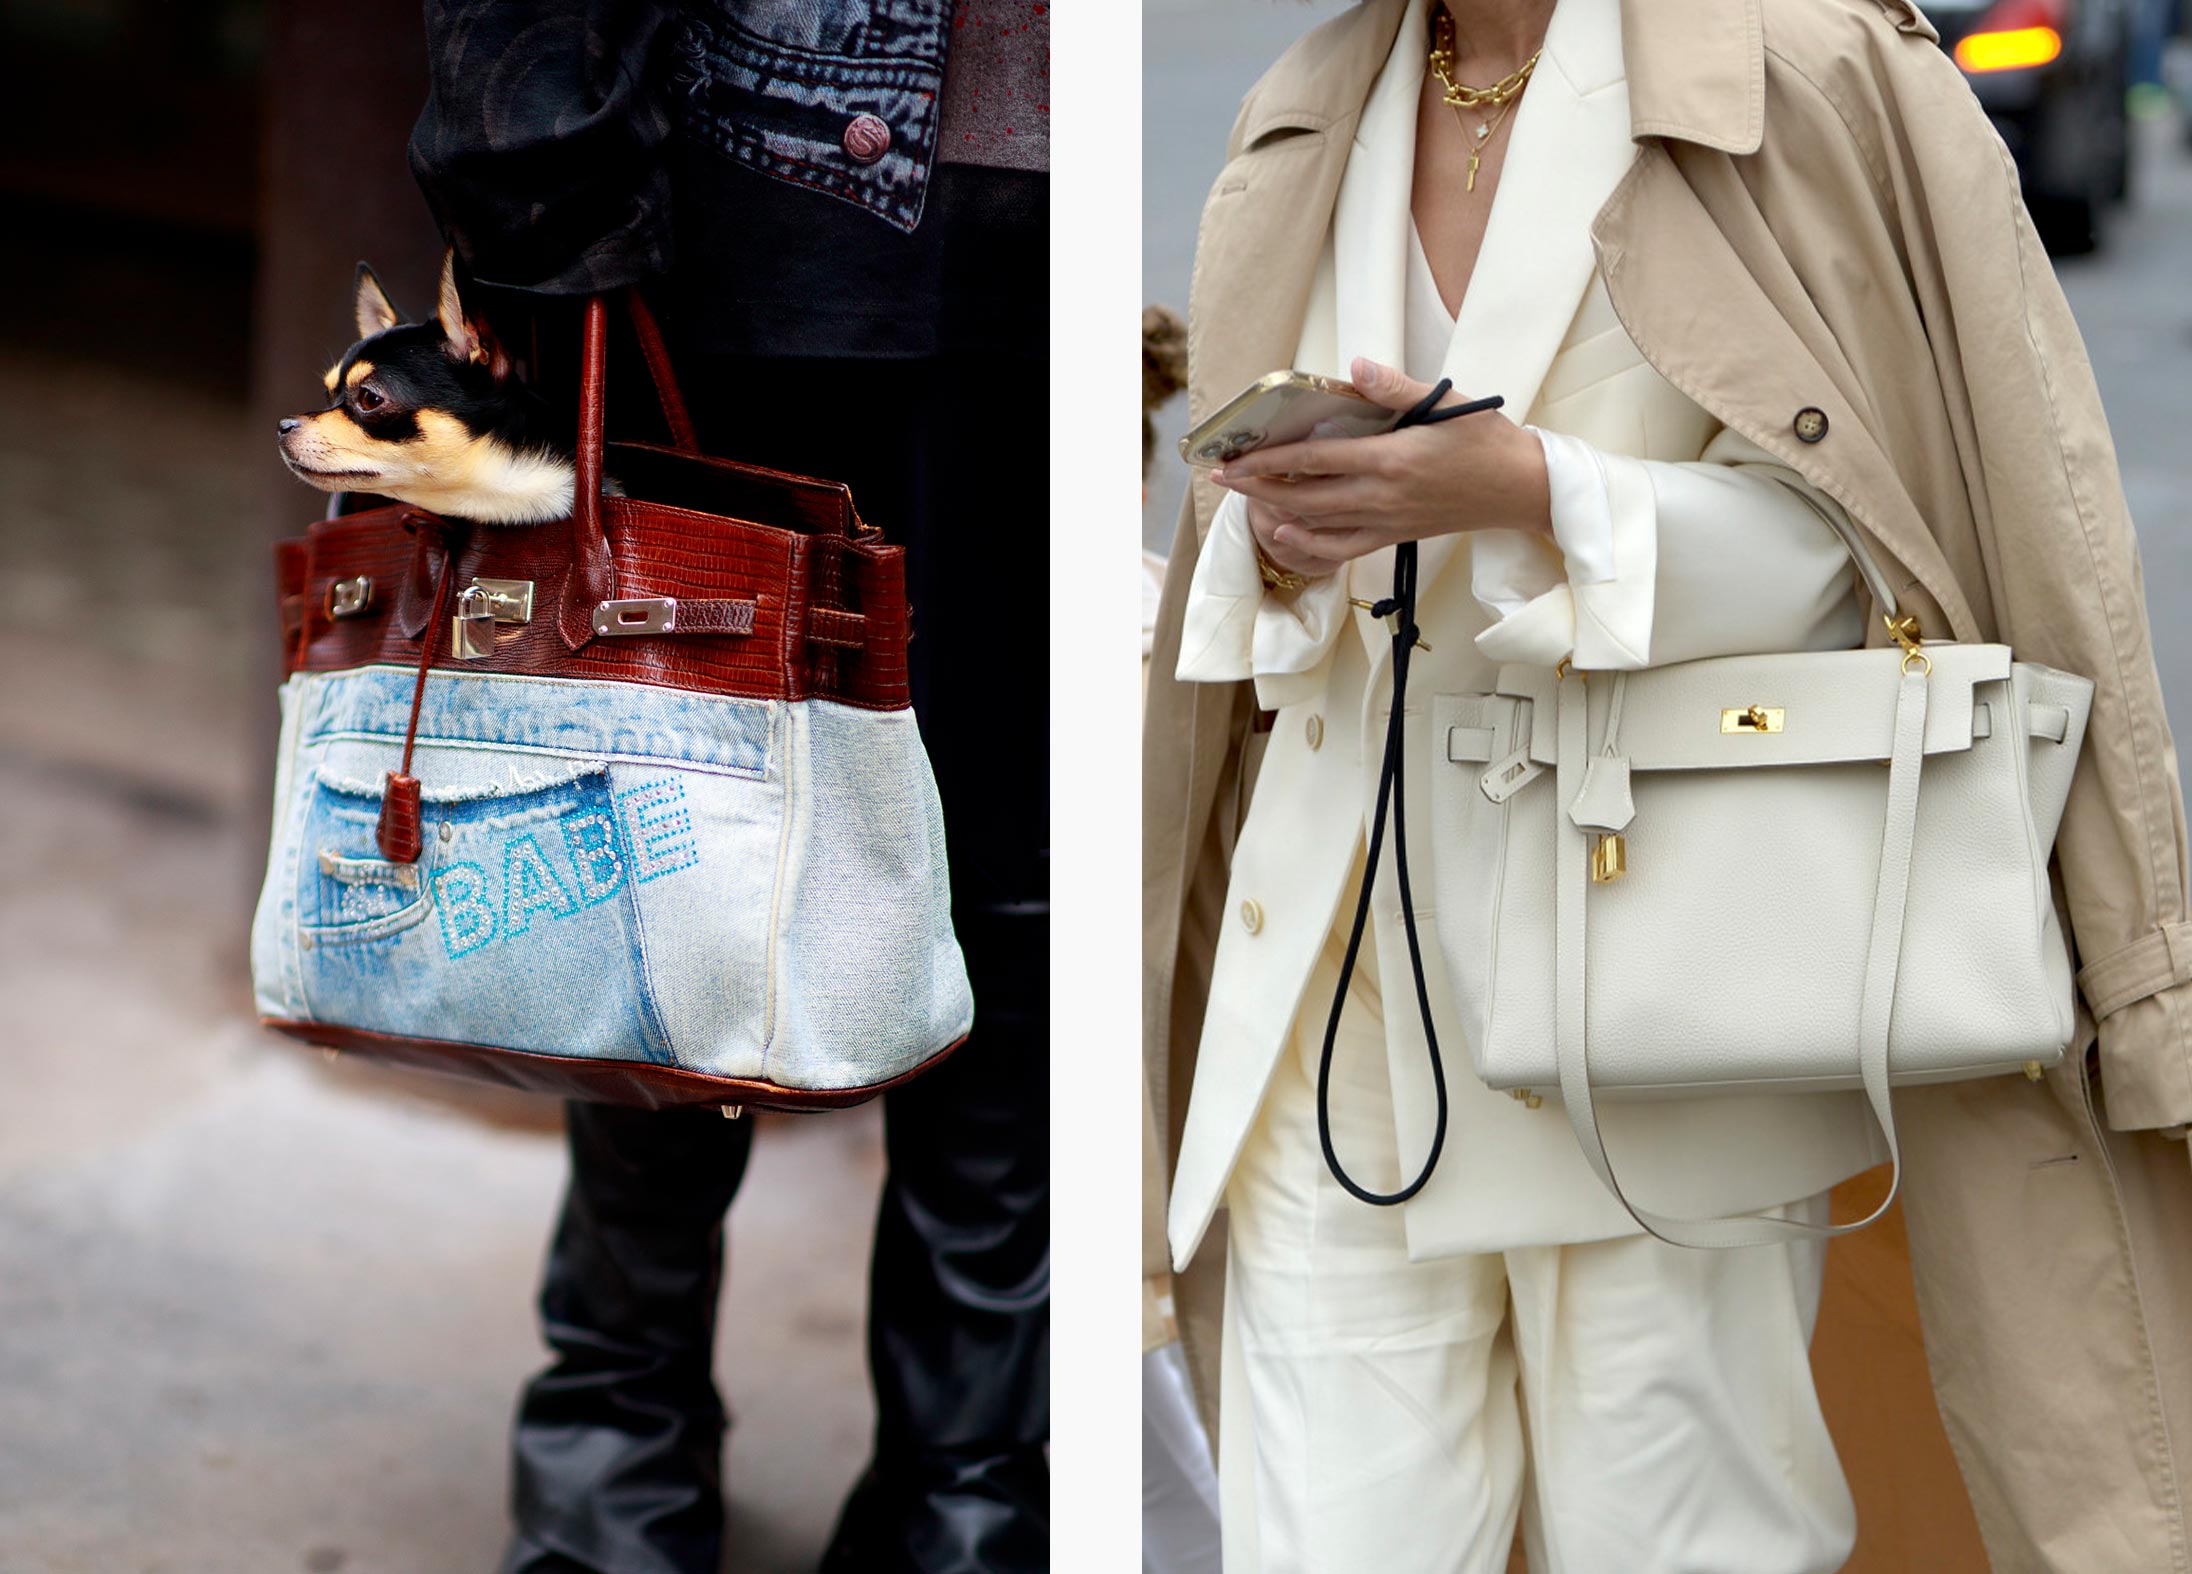 Hermès’ Birkin handbag